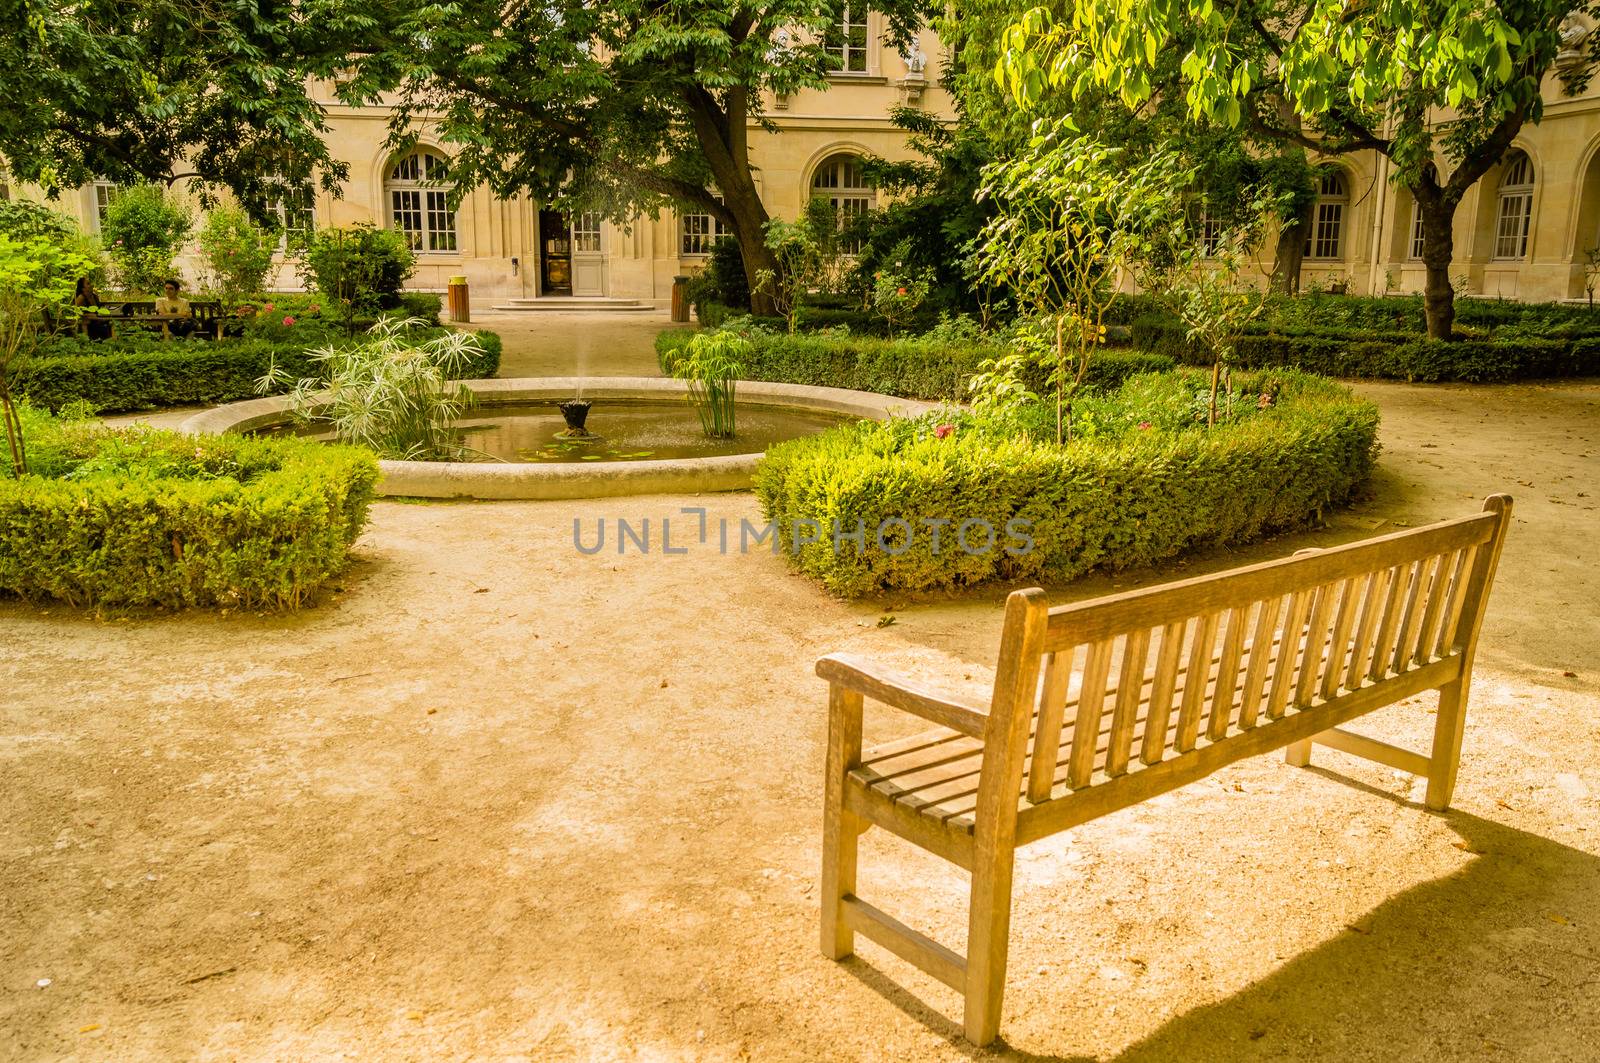 Ecole normale superieure de Paris garden and courtyard